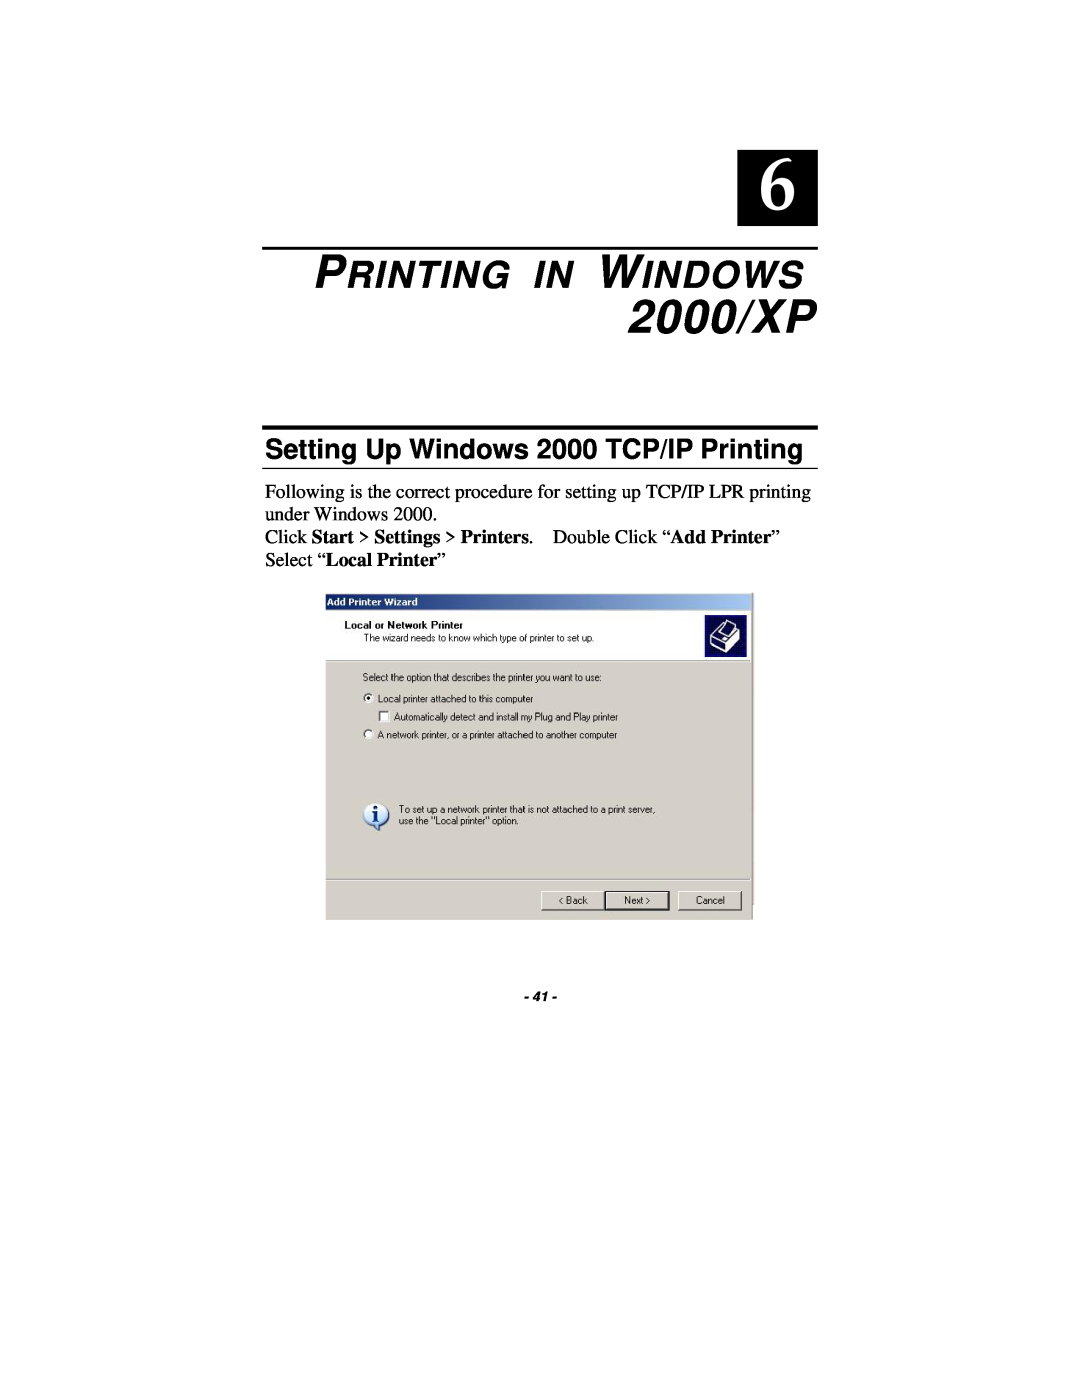 TRENDnet TE100-P1U manual Setting Up Windows 2000 TCP/IP Printing, 2000/XP, Printing In Windows 